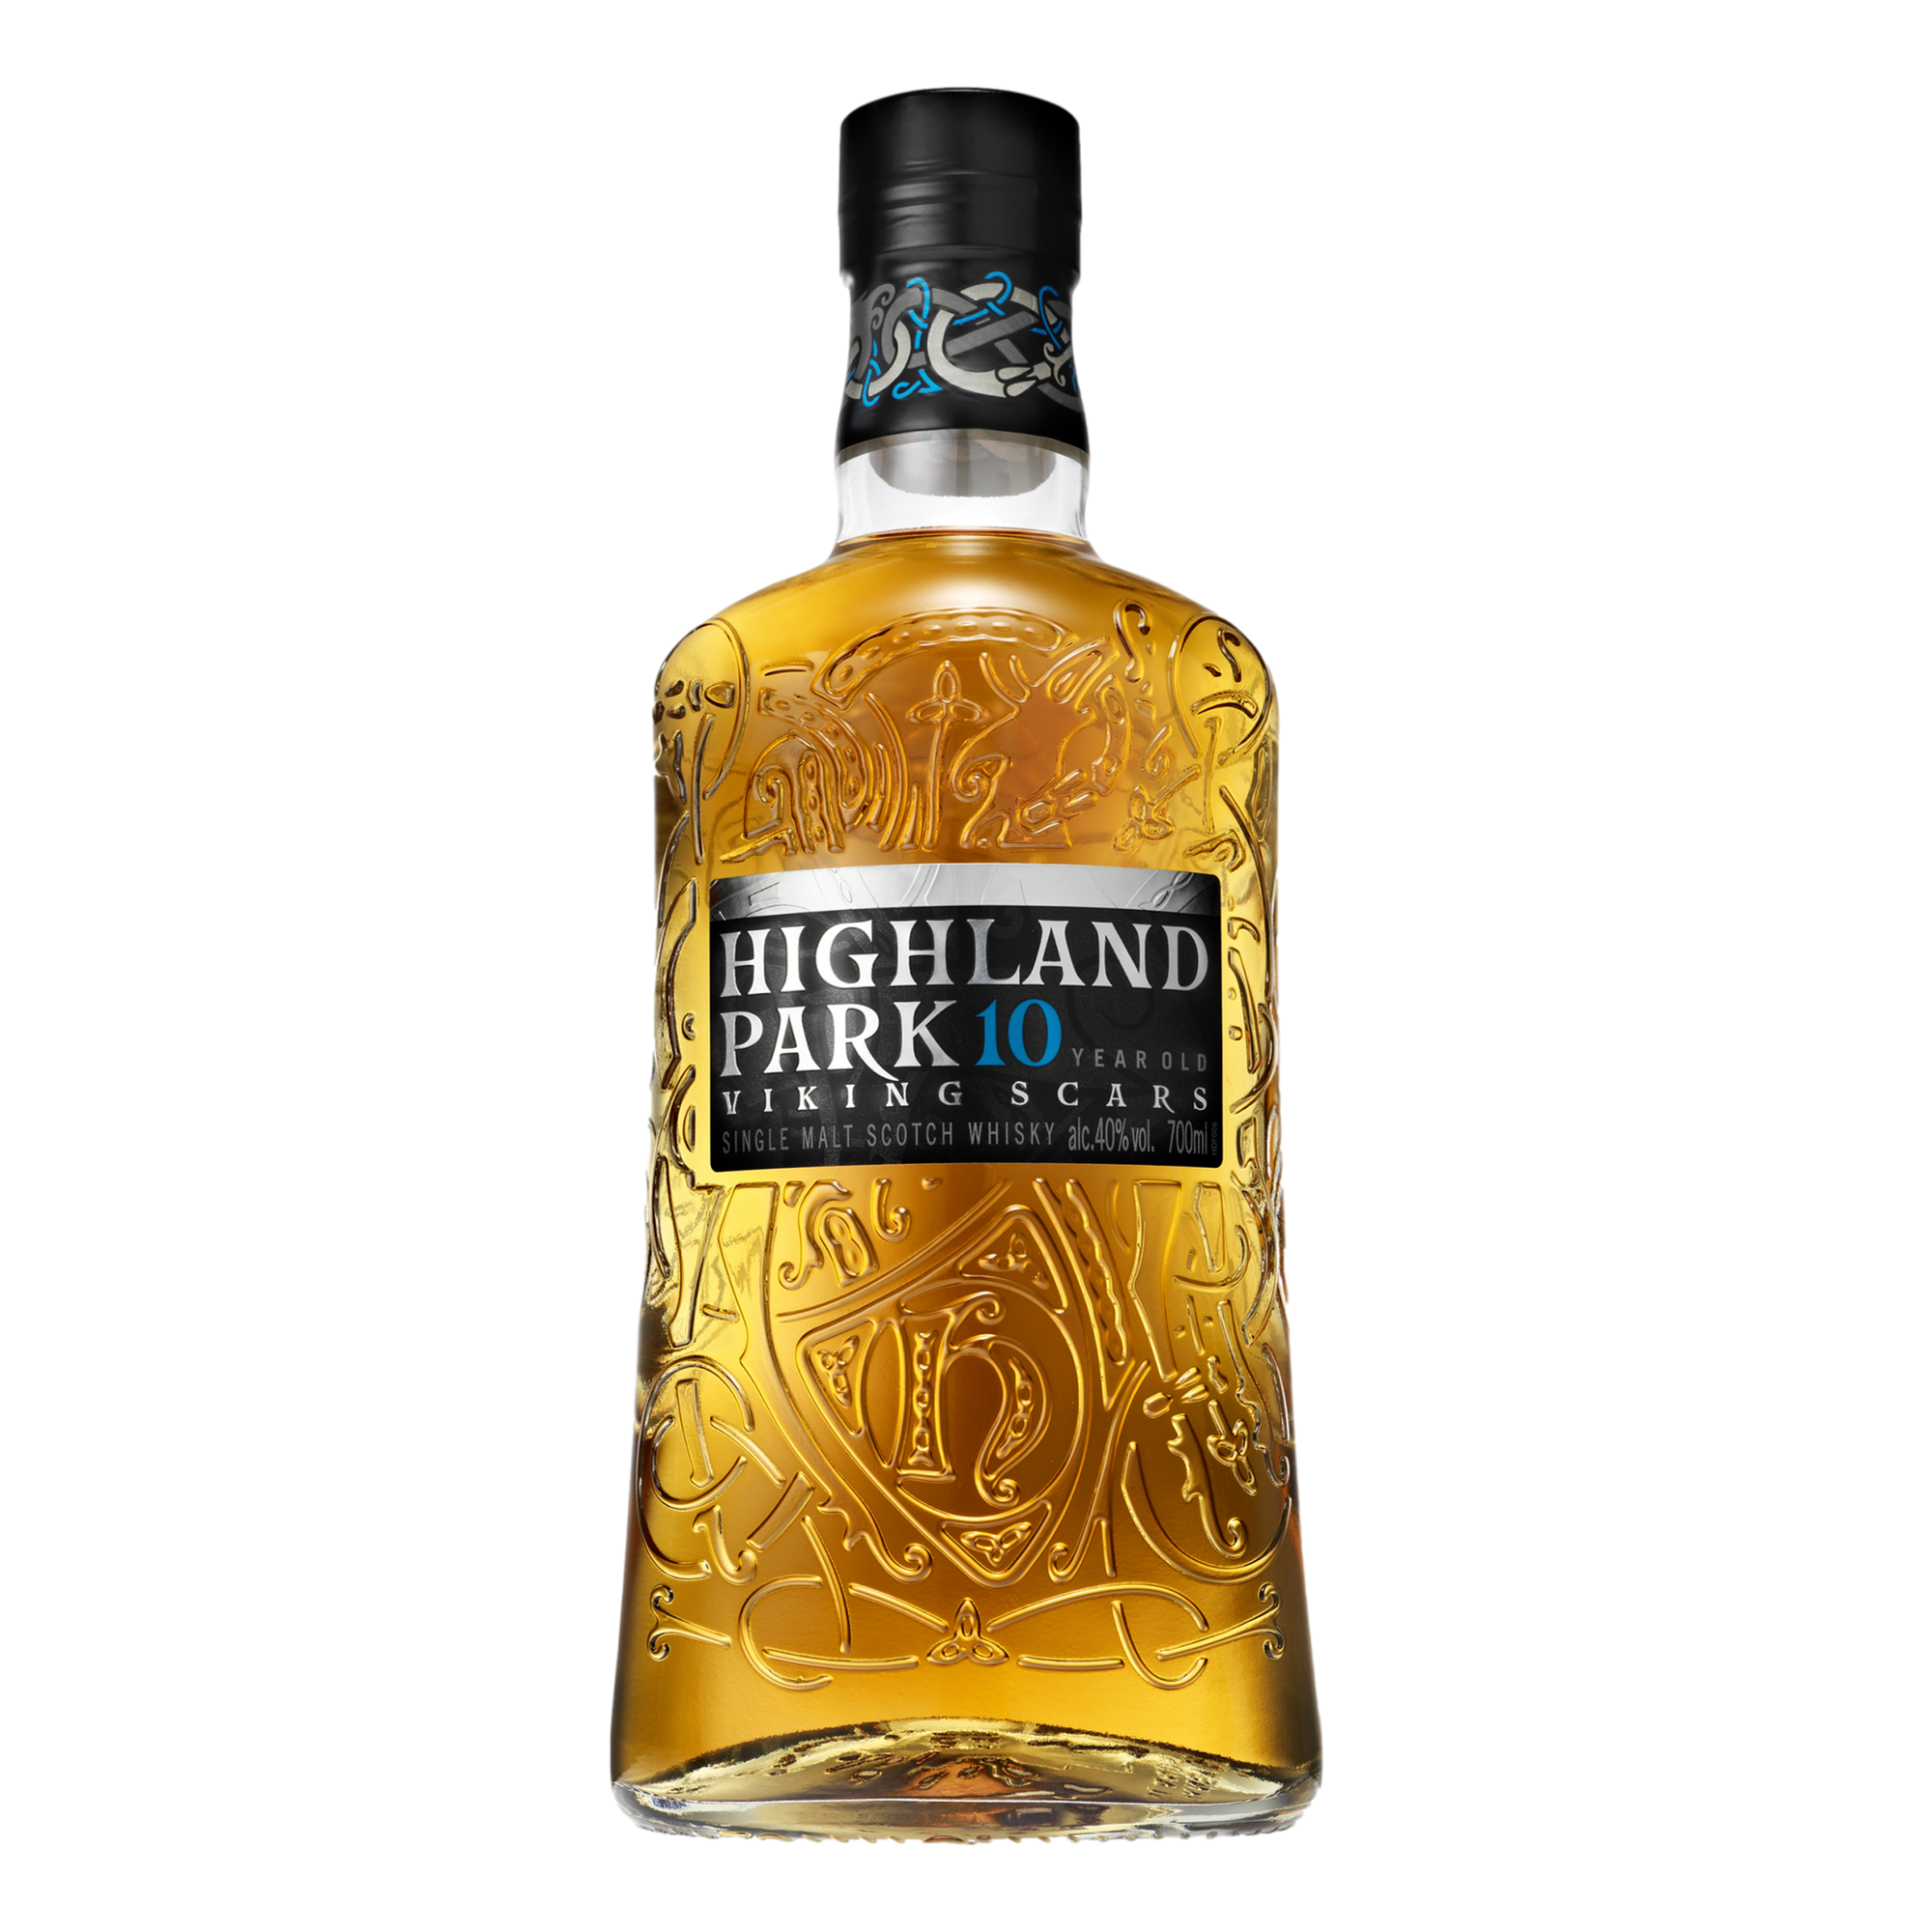 Highland Park Single Malt Scotch Whisky Viking Scars 10YO 700ml